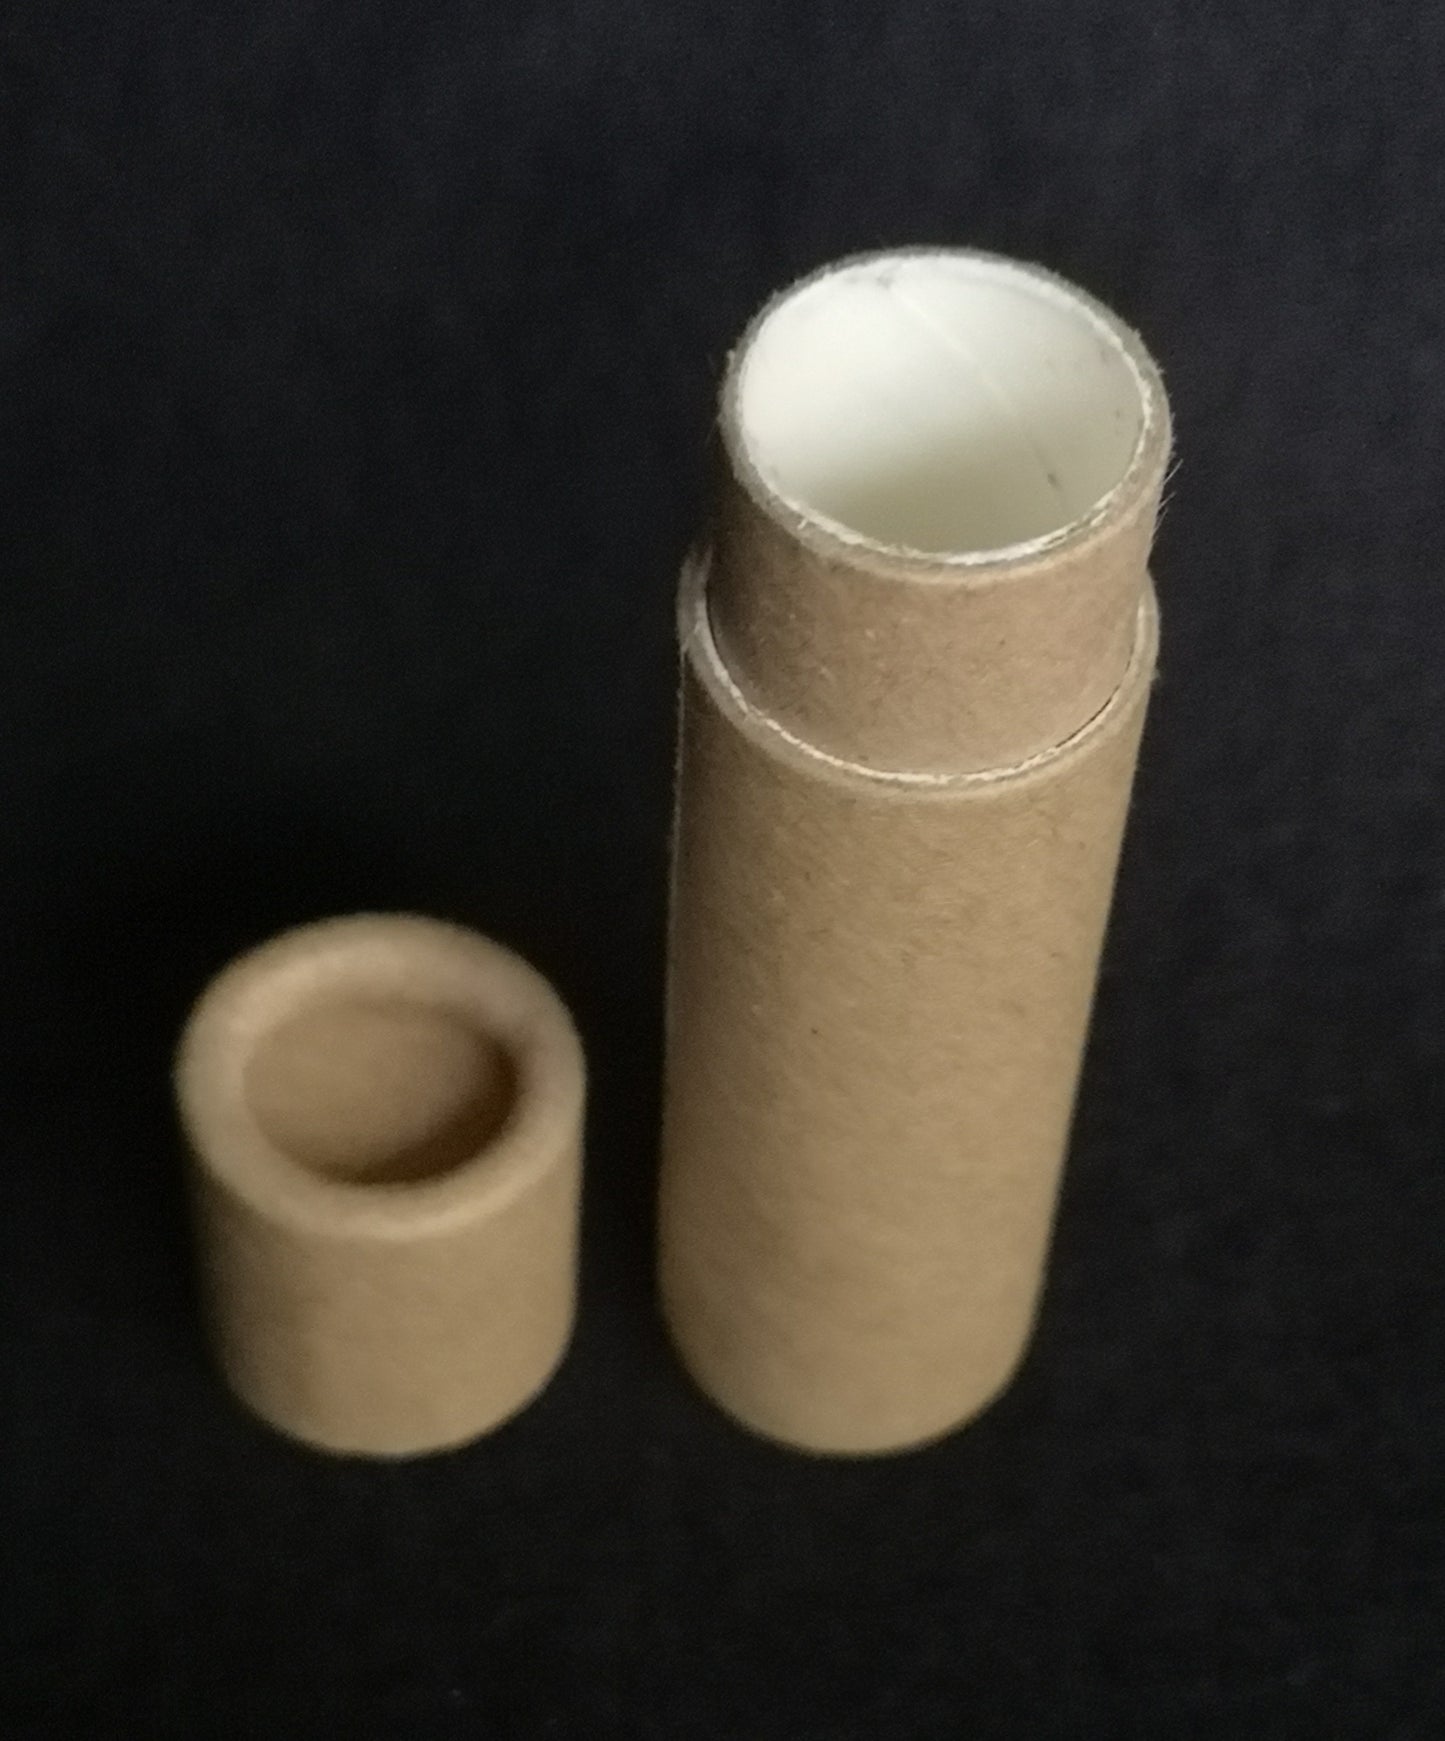 Lippenbalsamhülsen 10 ml - leer für DIY-Projekte